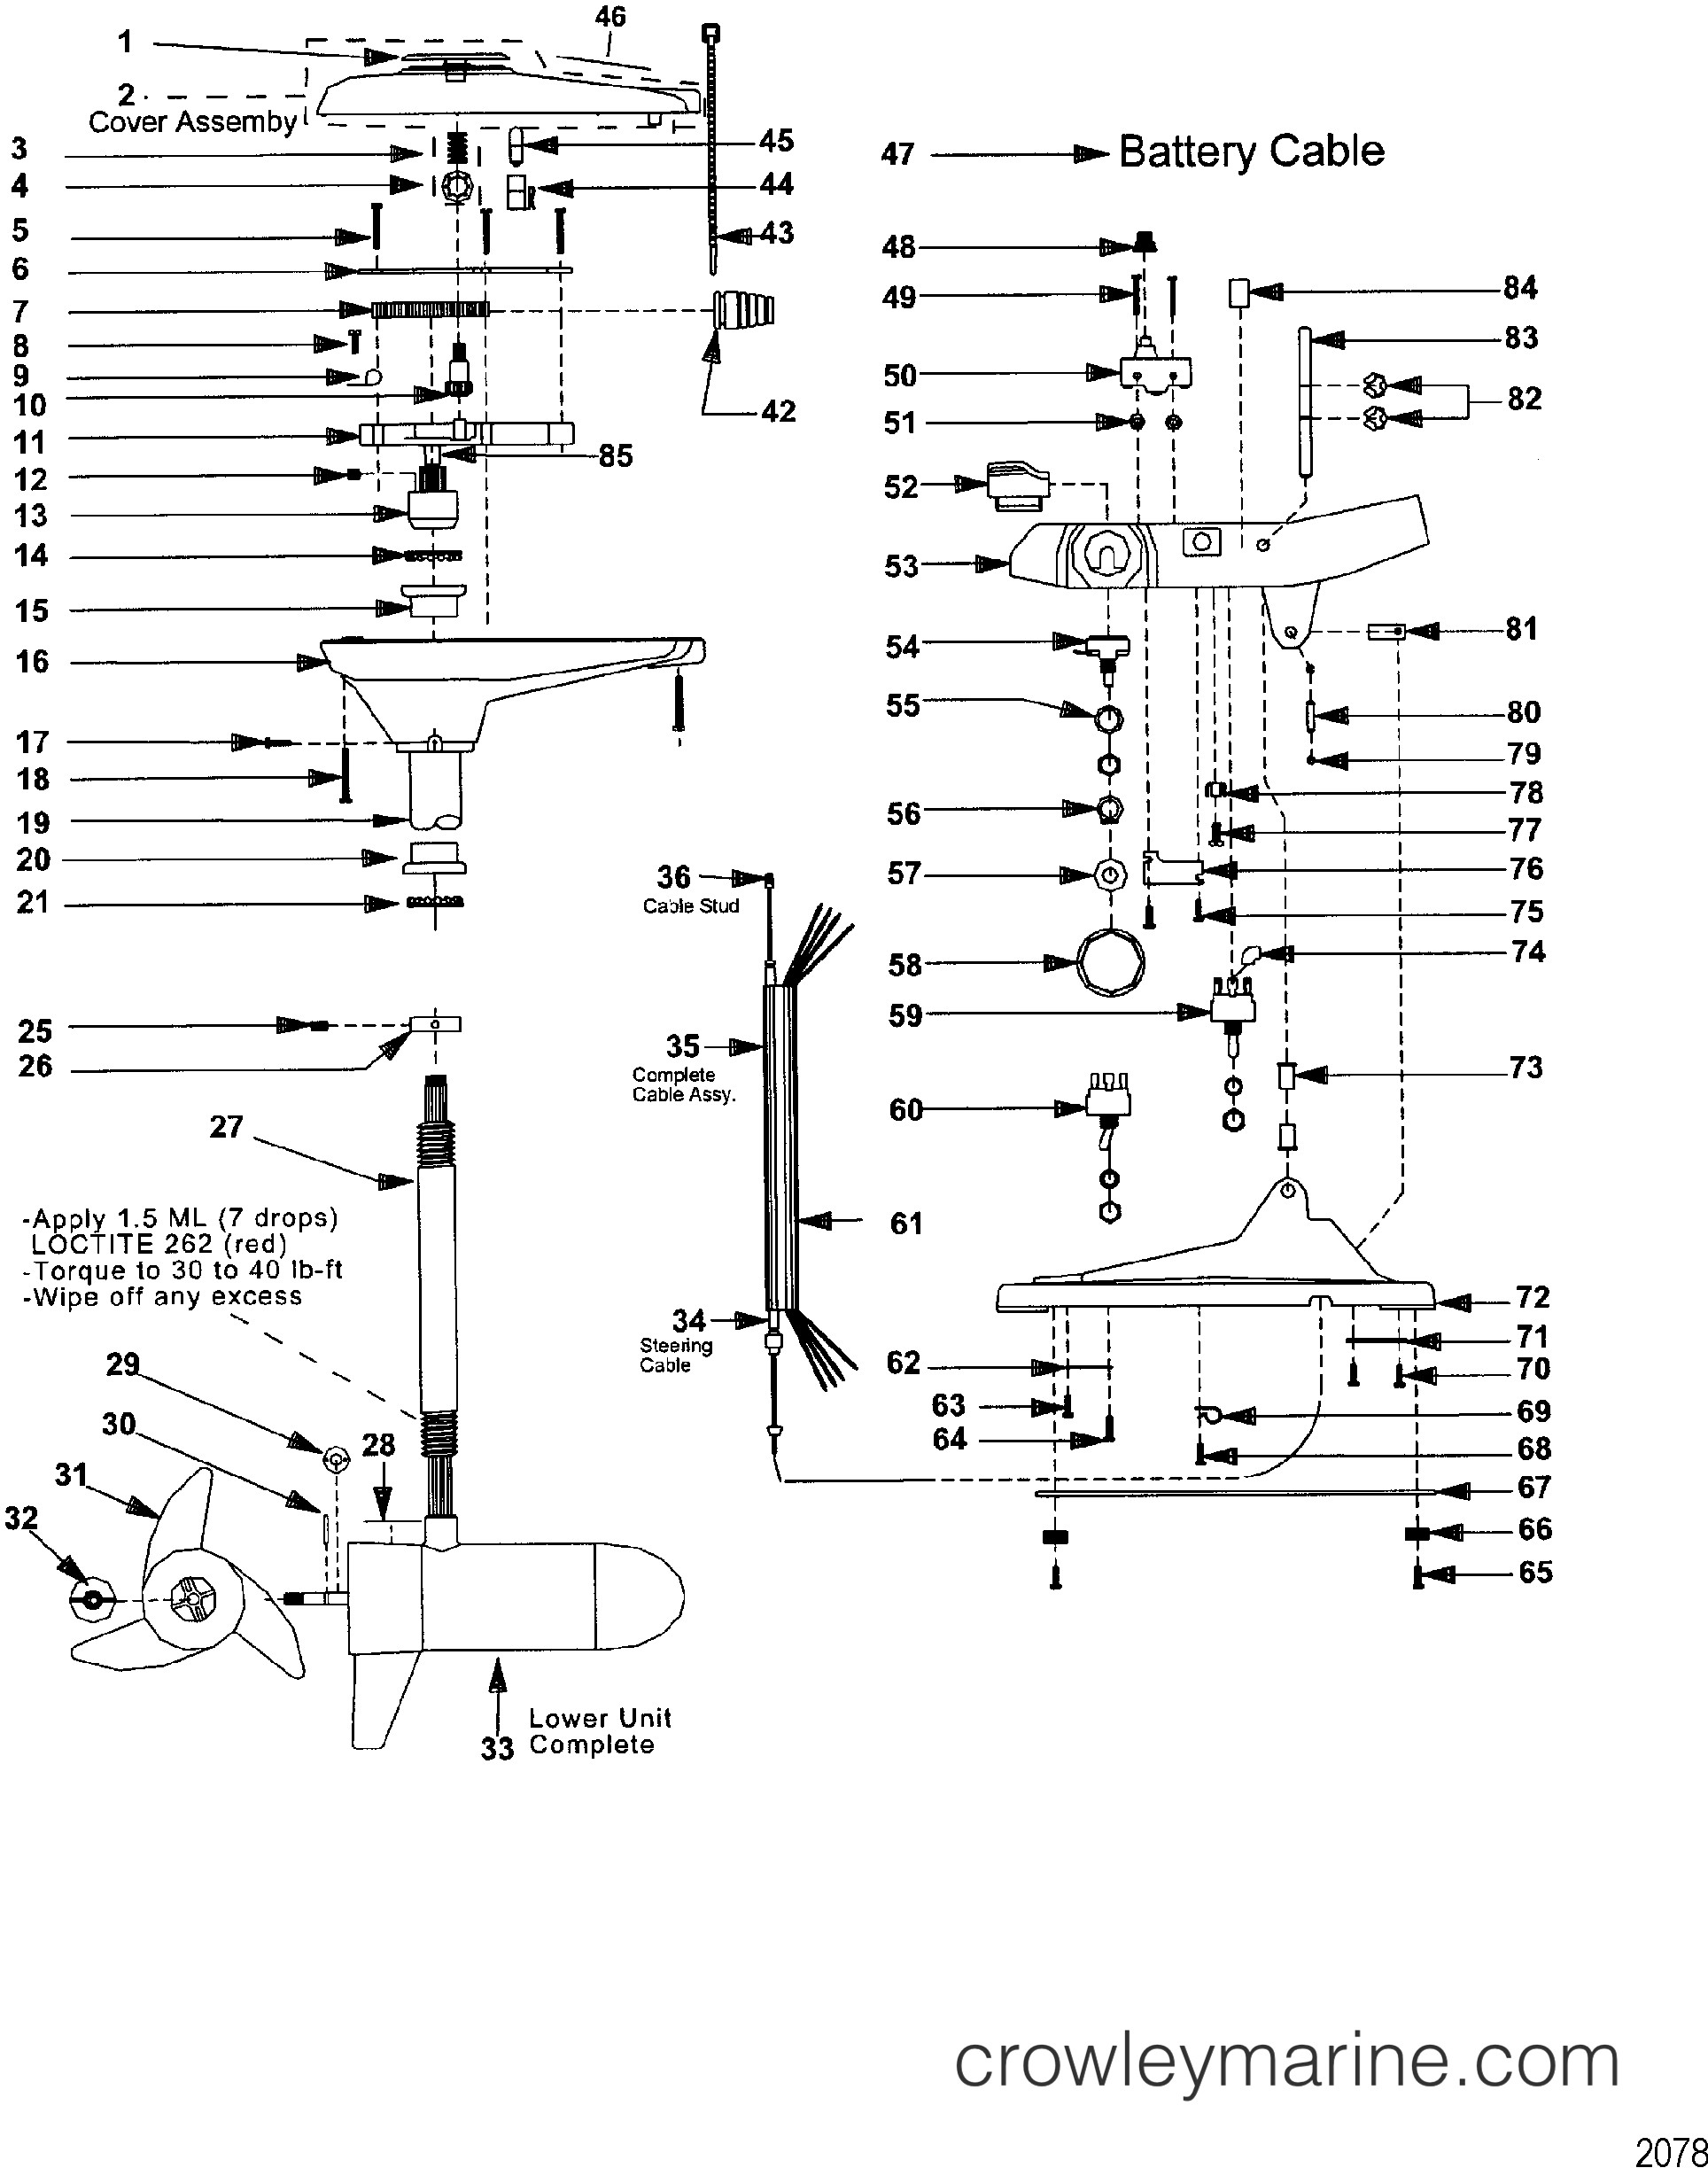 Garmin Transducer Wiring Diagram Minn Kota Wiring Diagram Blurts Of Garmin Transducer Wiring Diagram